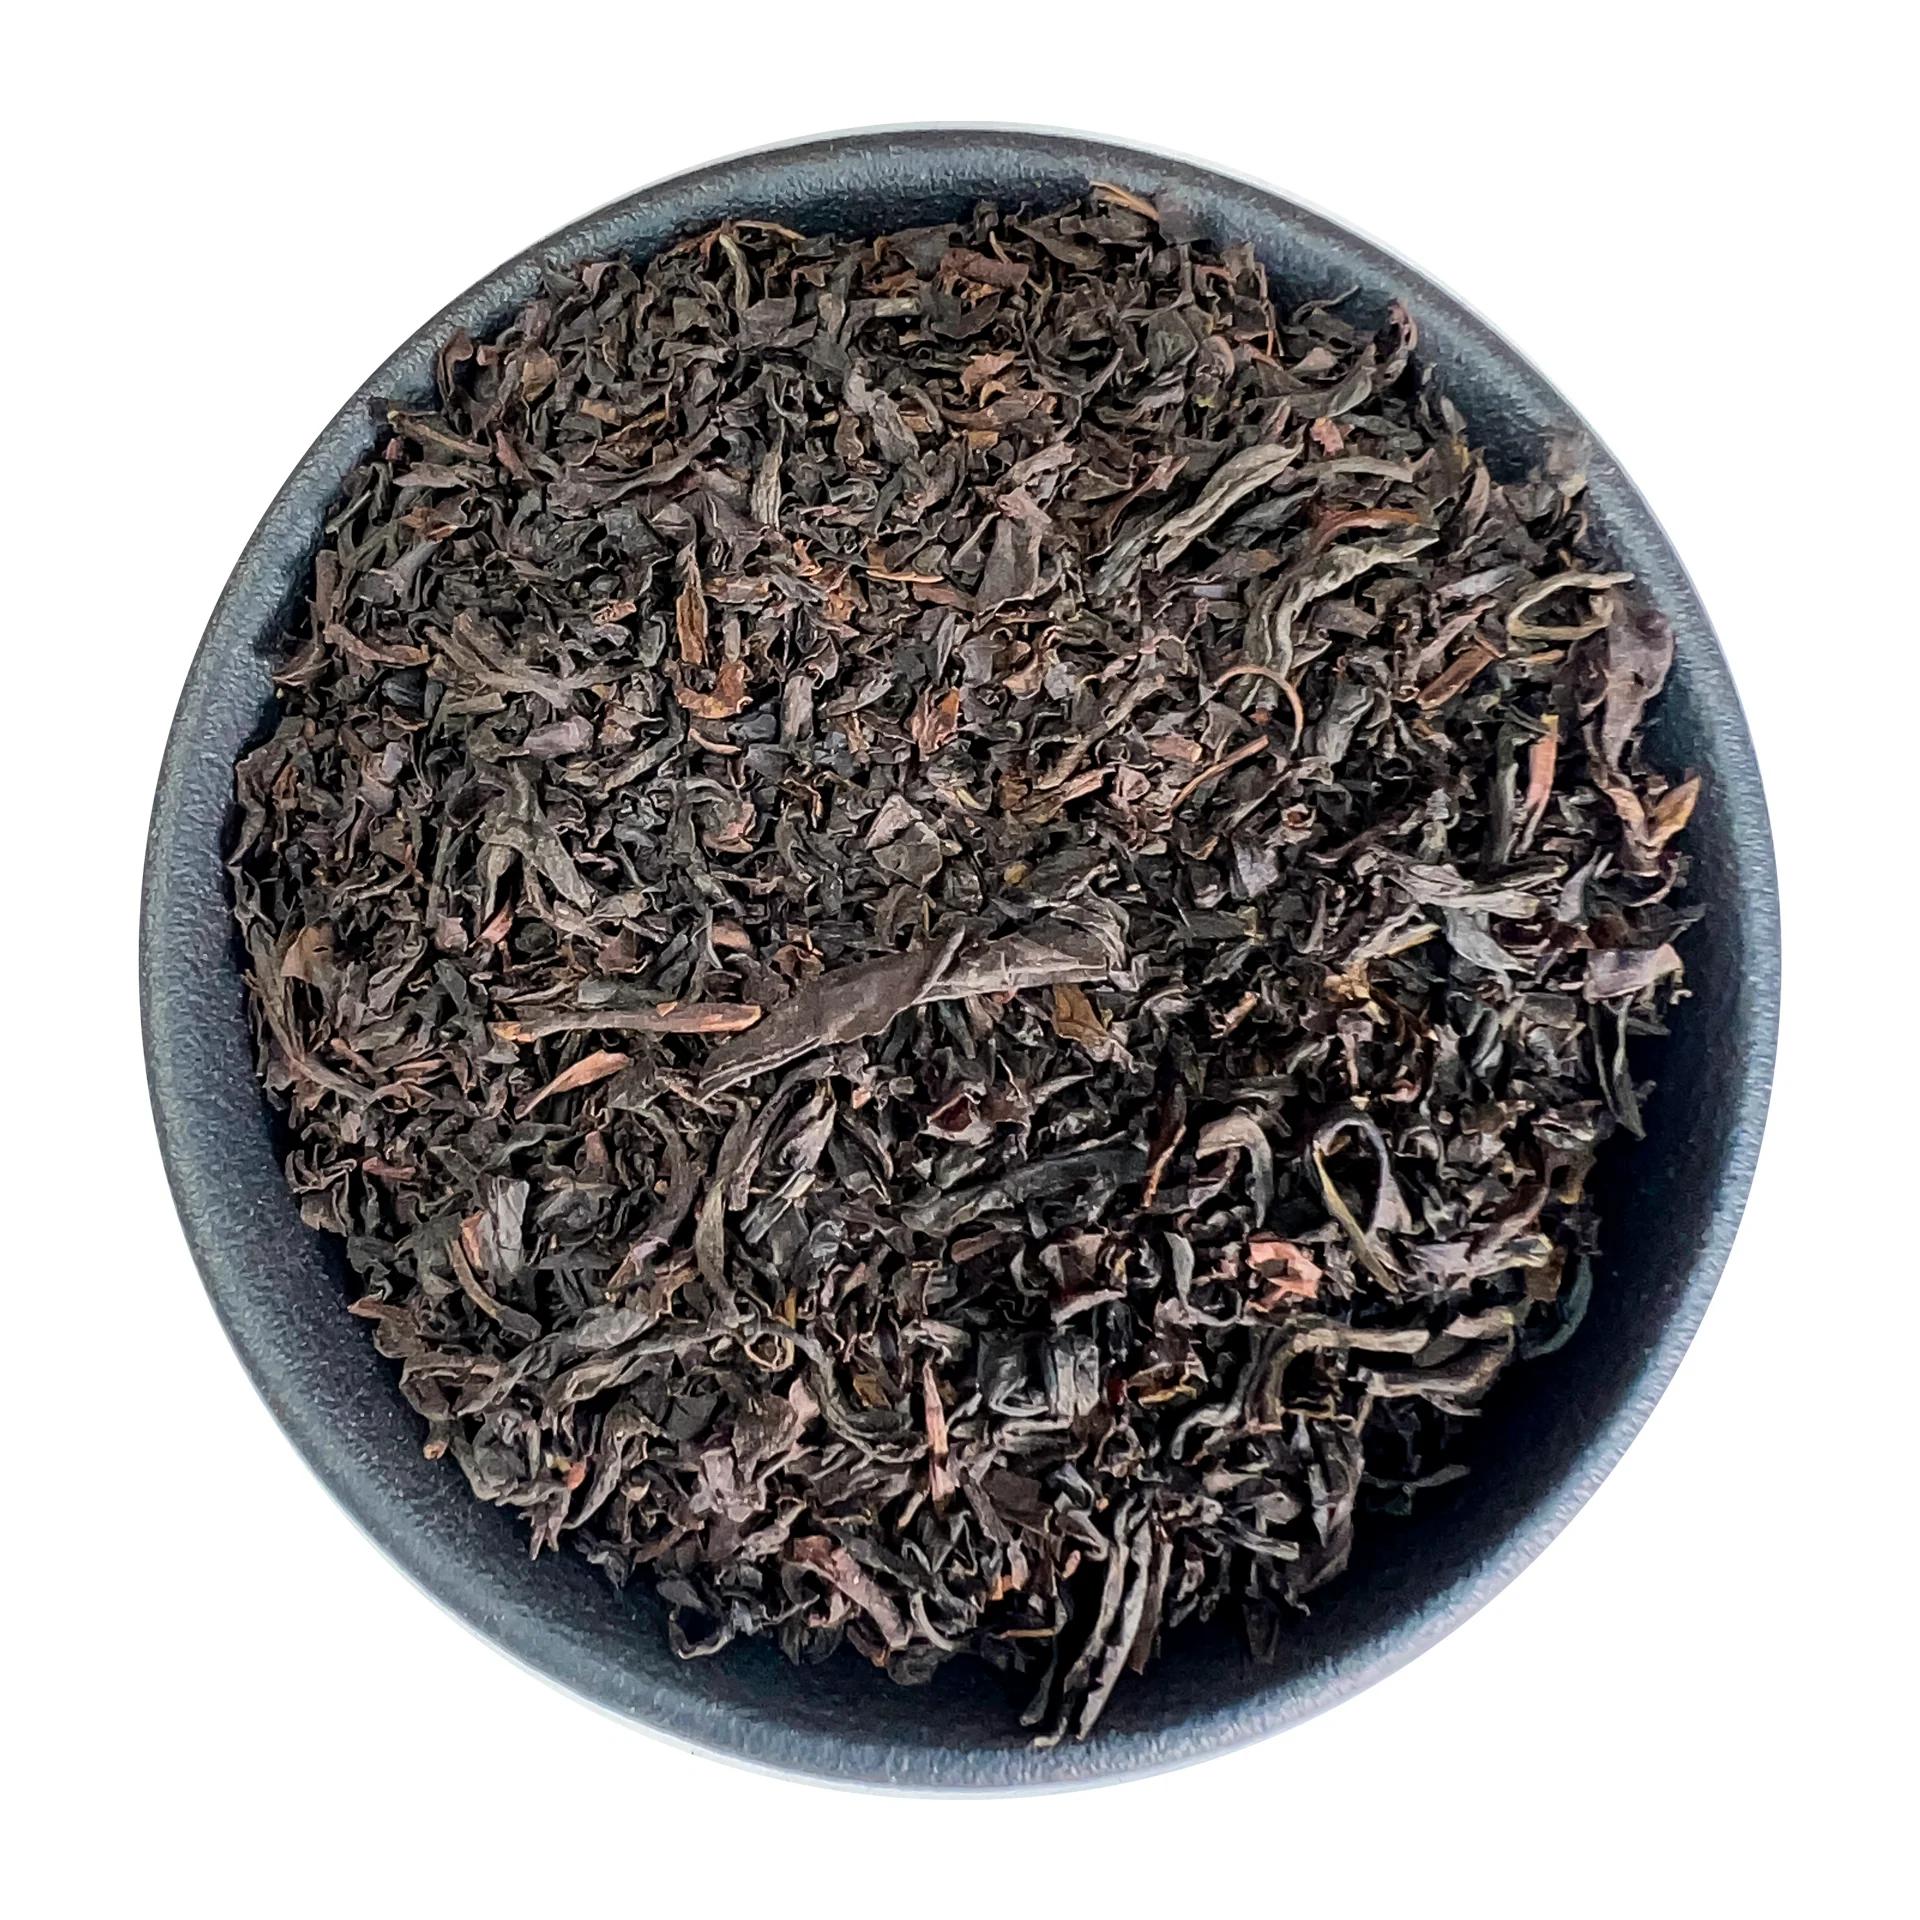 smoked earl grey tea - How does Earl Grey tea make you feel